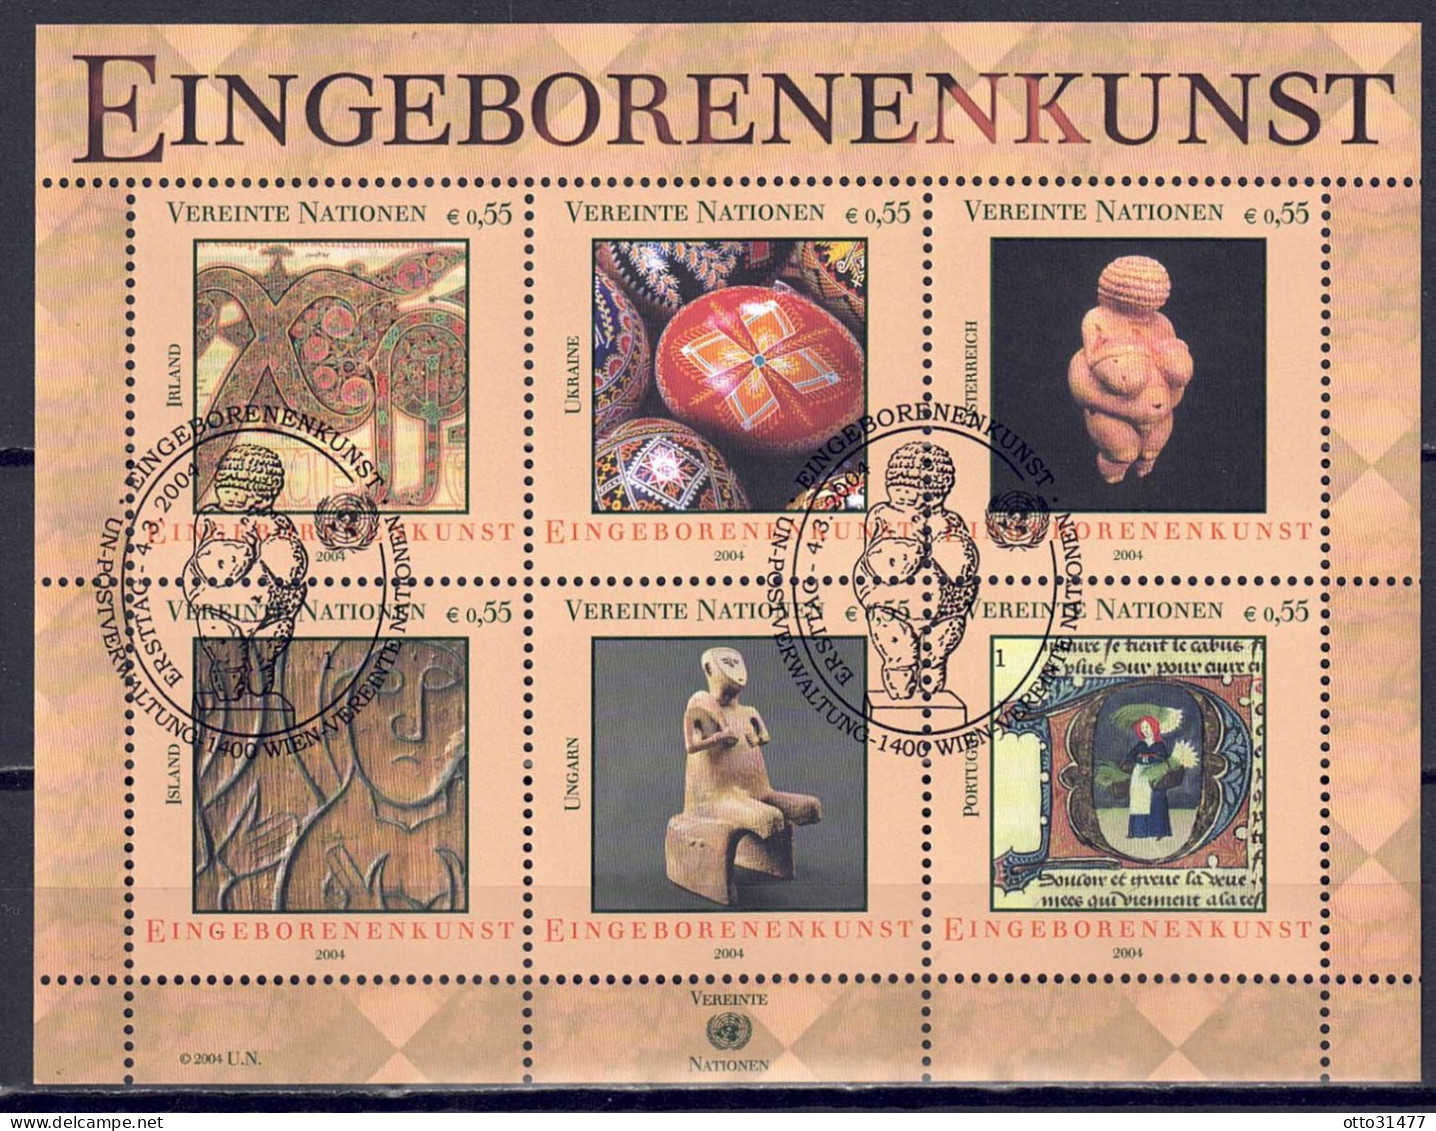 UNO Wien 2004 - Eingeborenenkunst (II), Block 18, Gestempelt / Used - Gebraucht